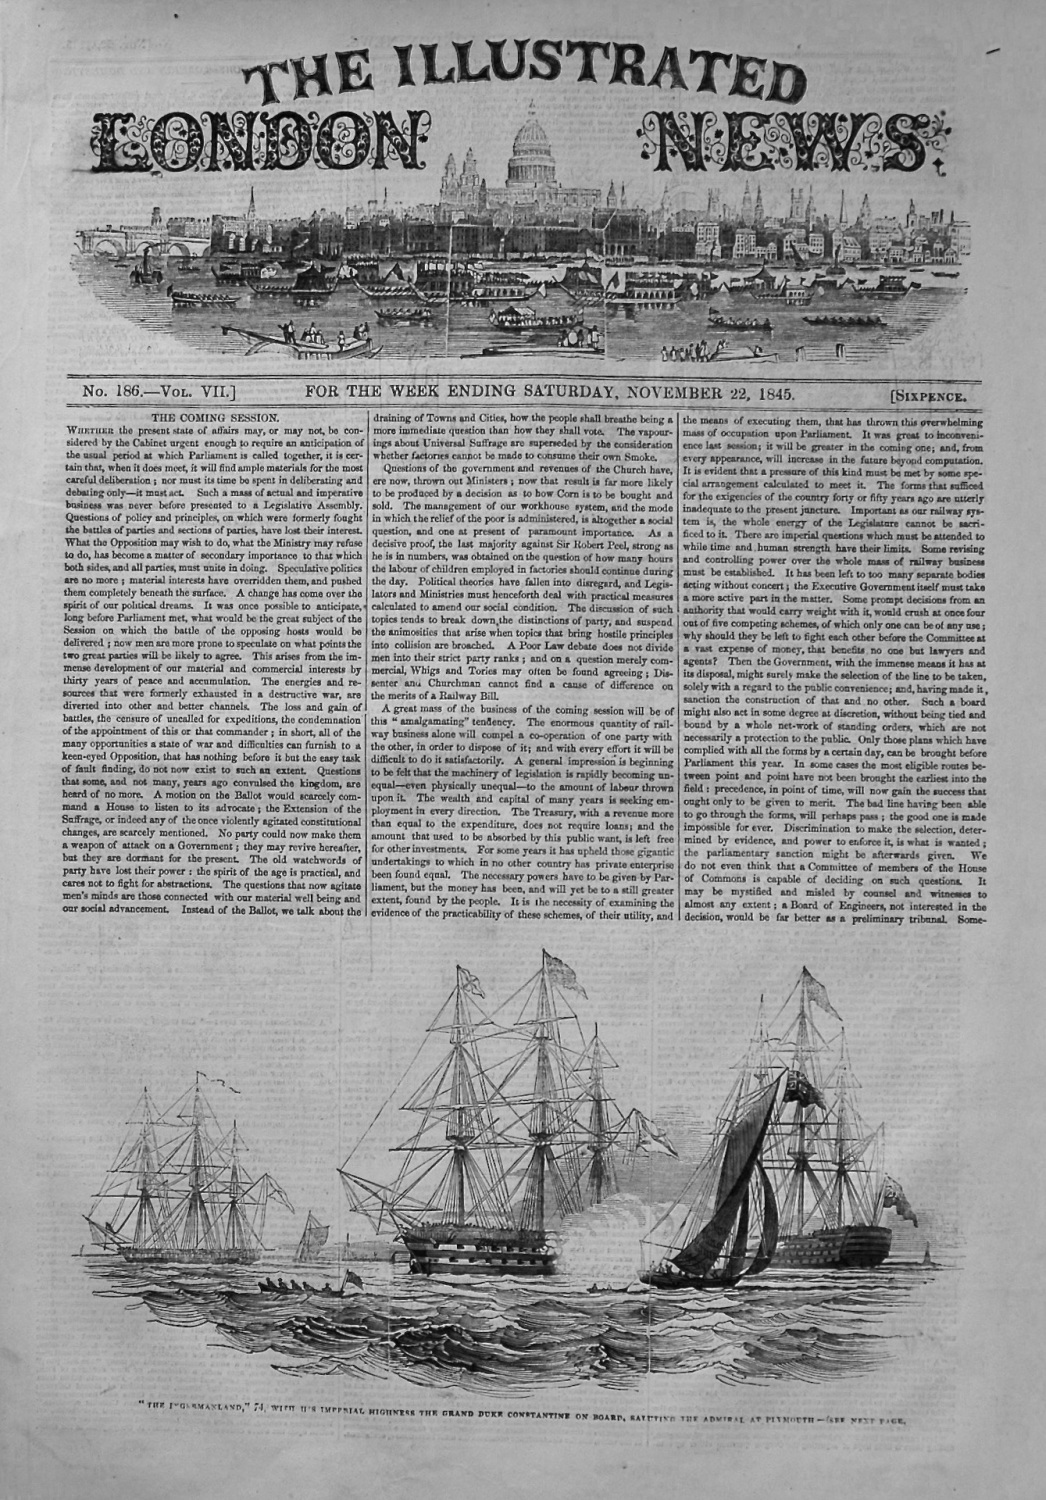 Illustrated London News. November 22nd, 1845